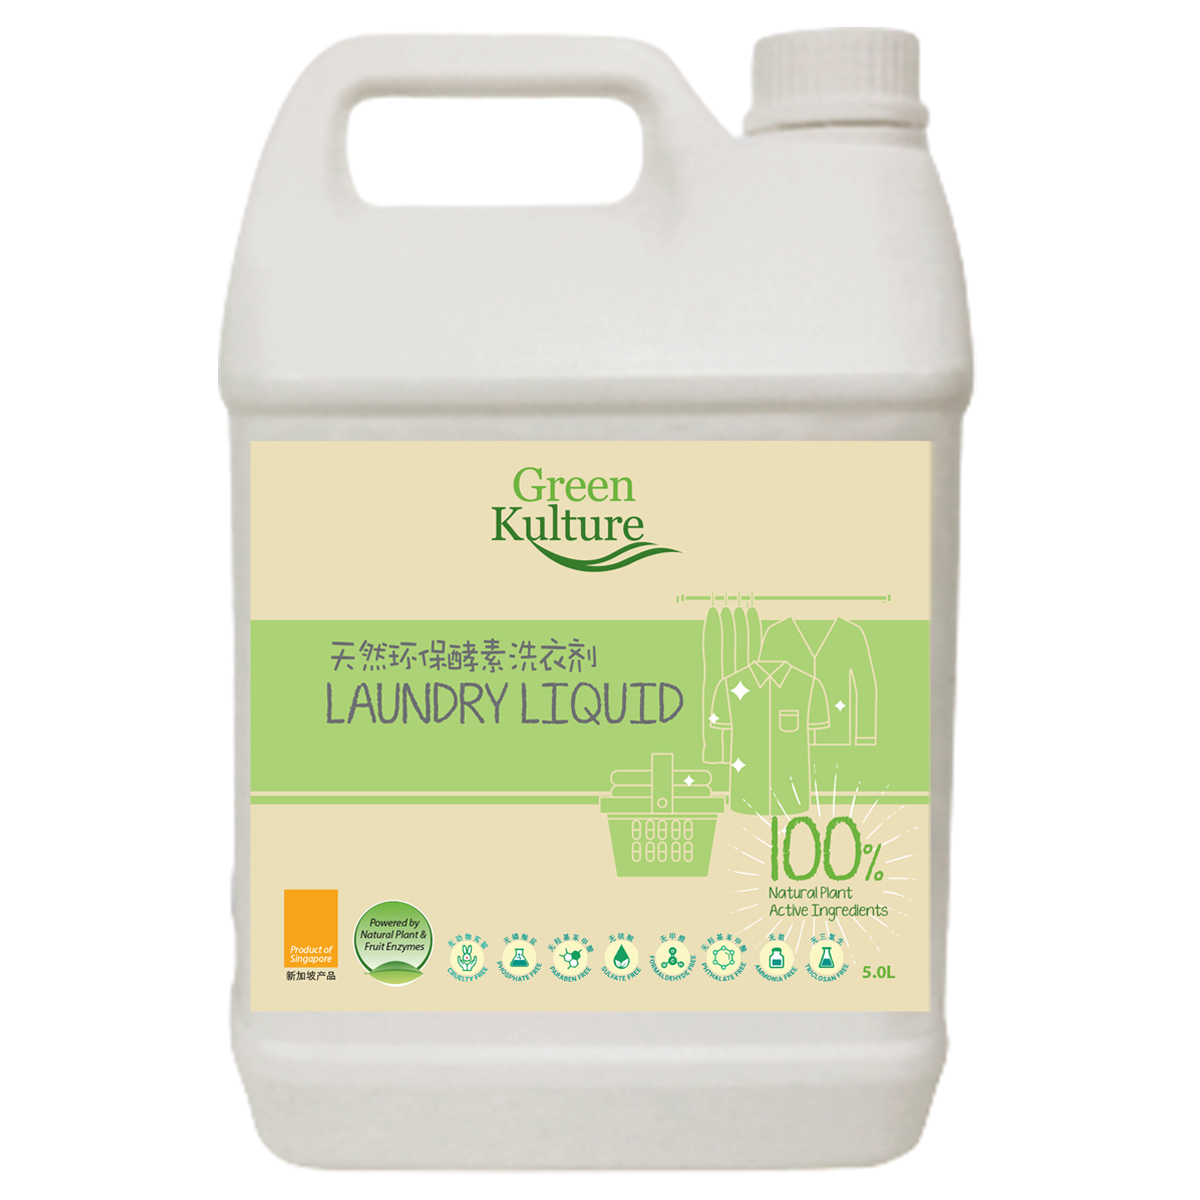 Green Kulture Laundry Liquid 5L